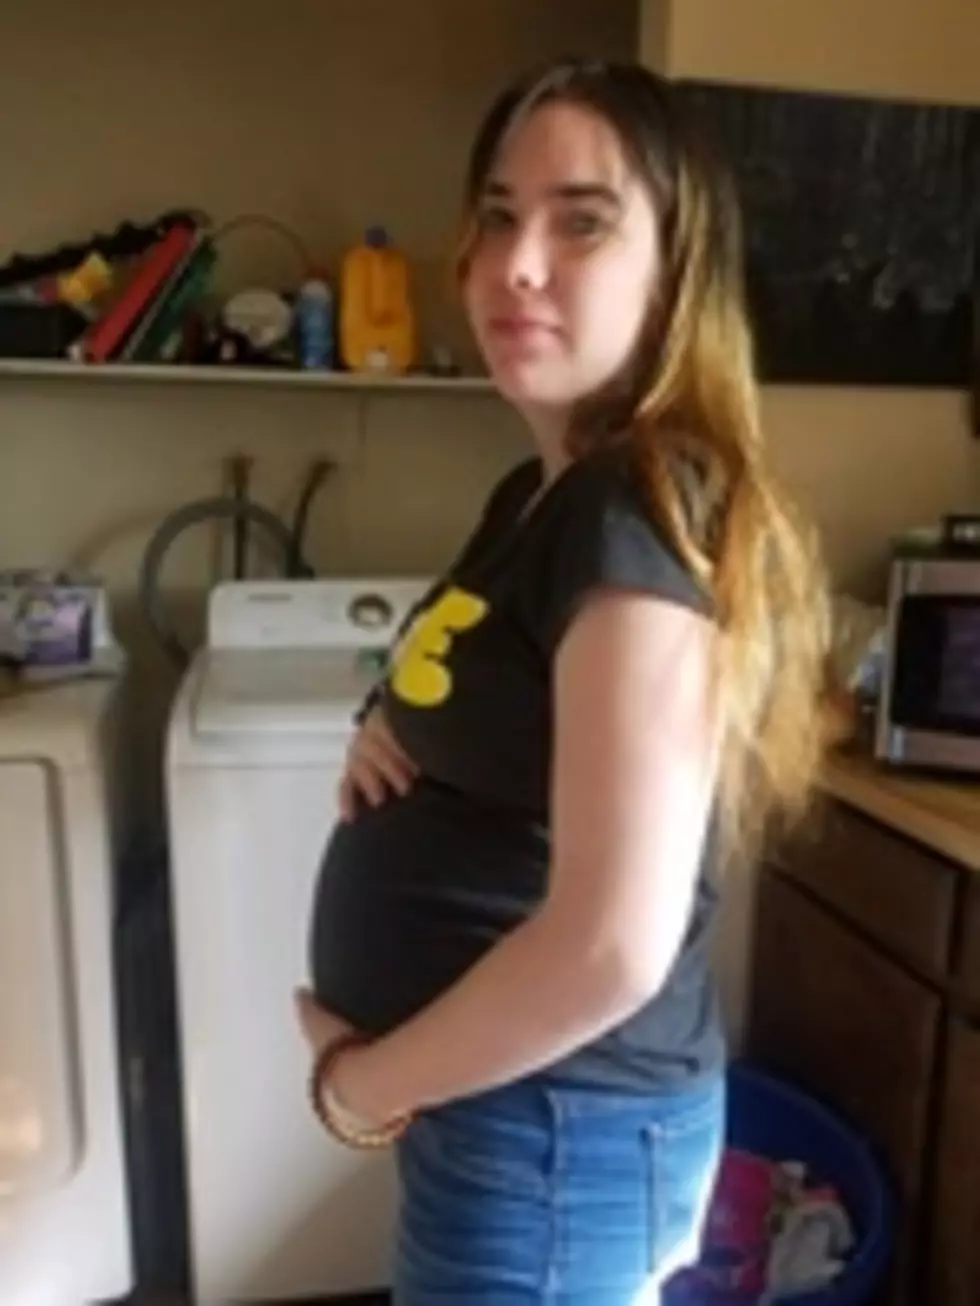 Pregnant Boardman teen missing, endangered